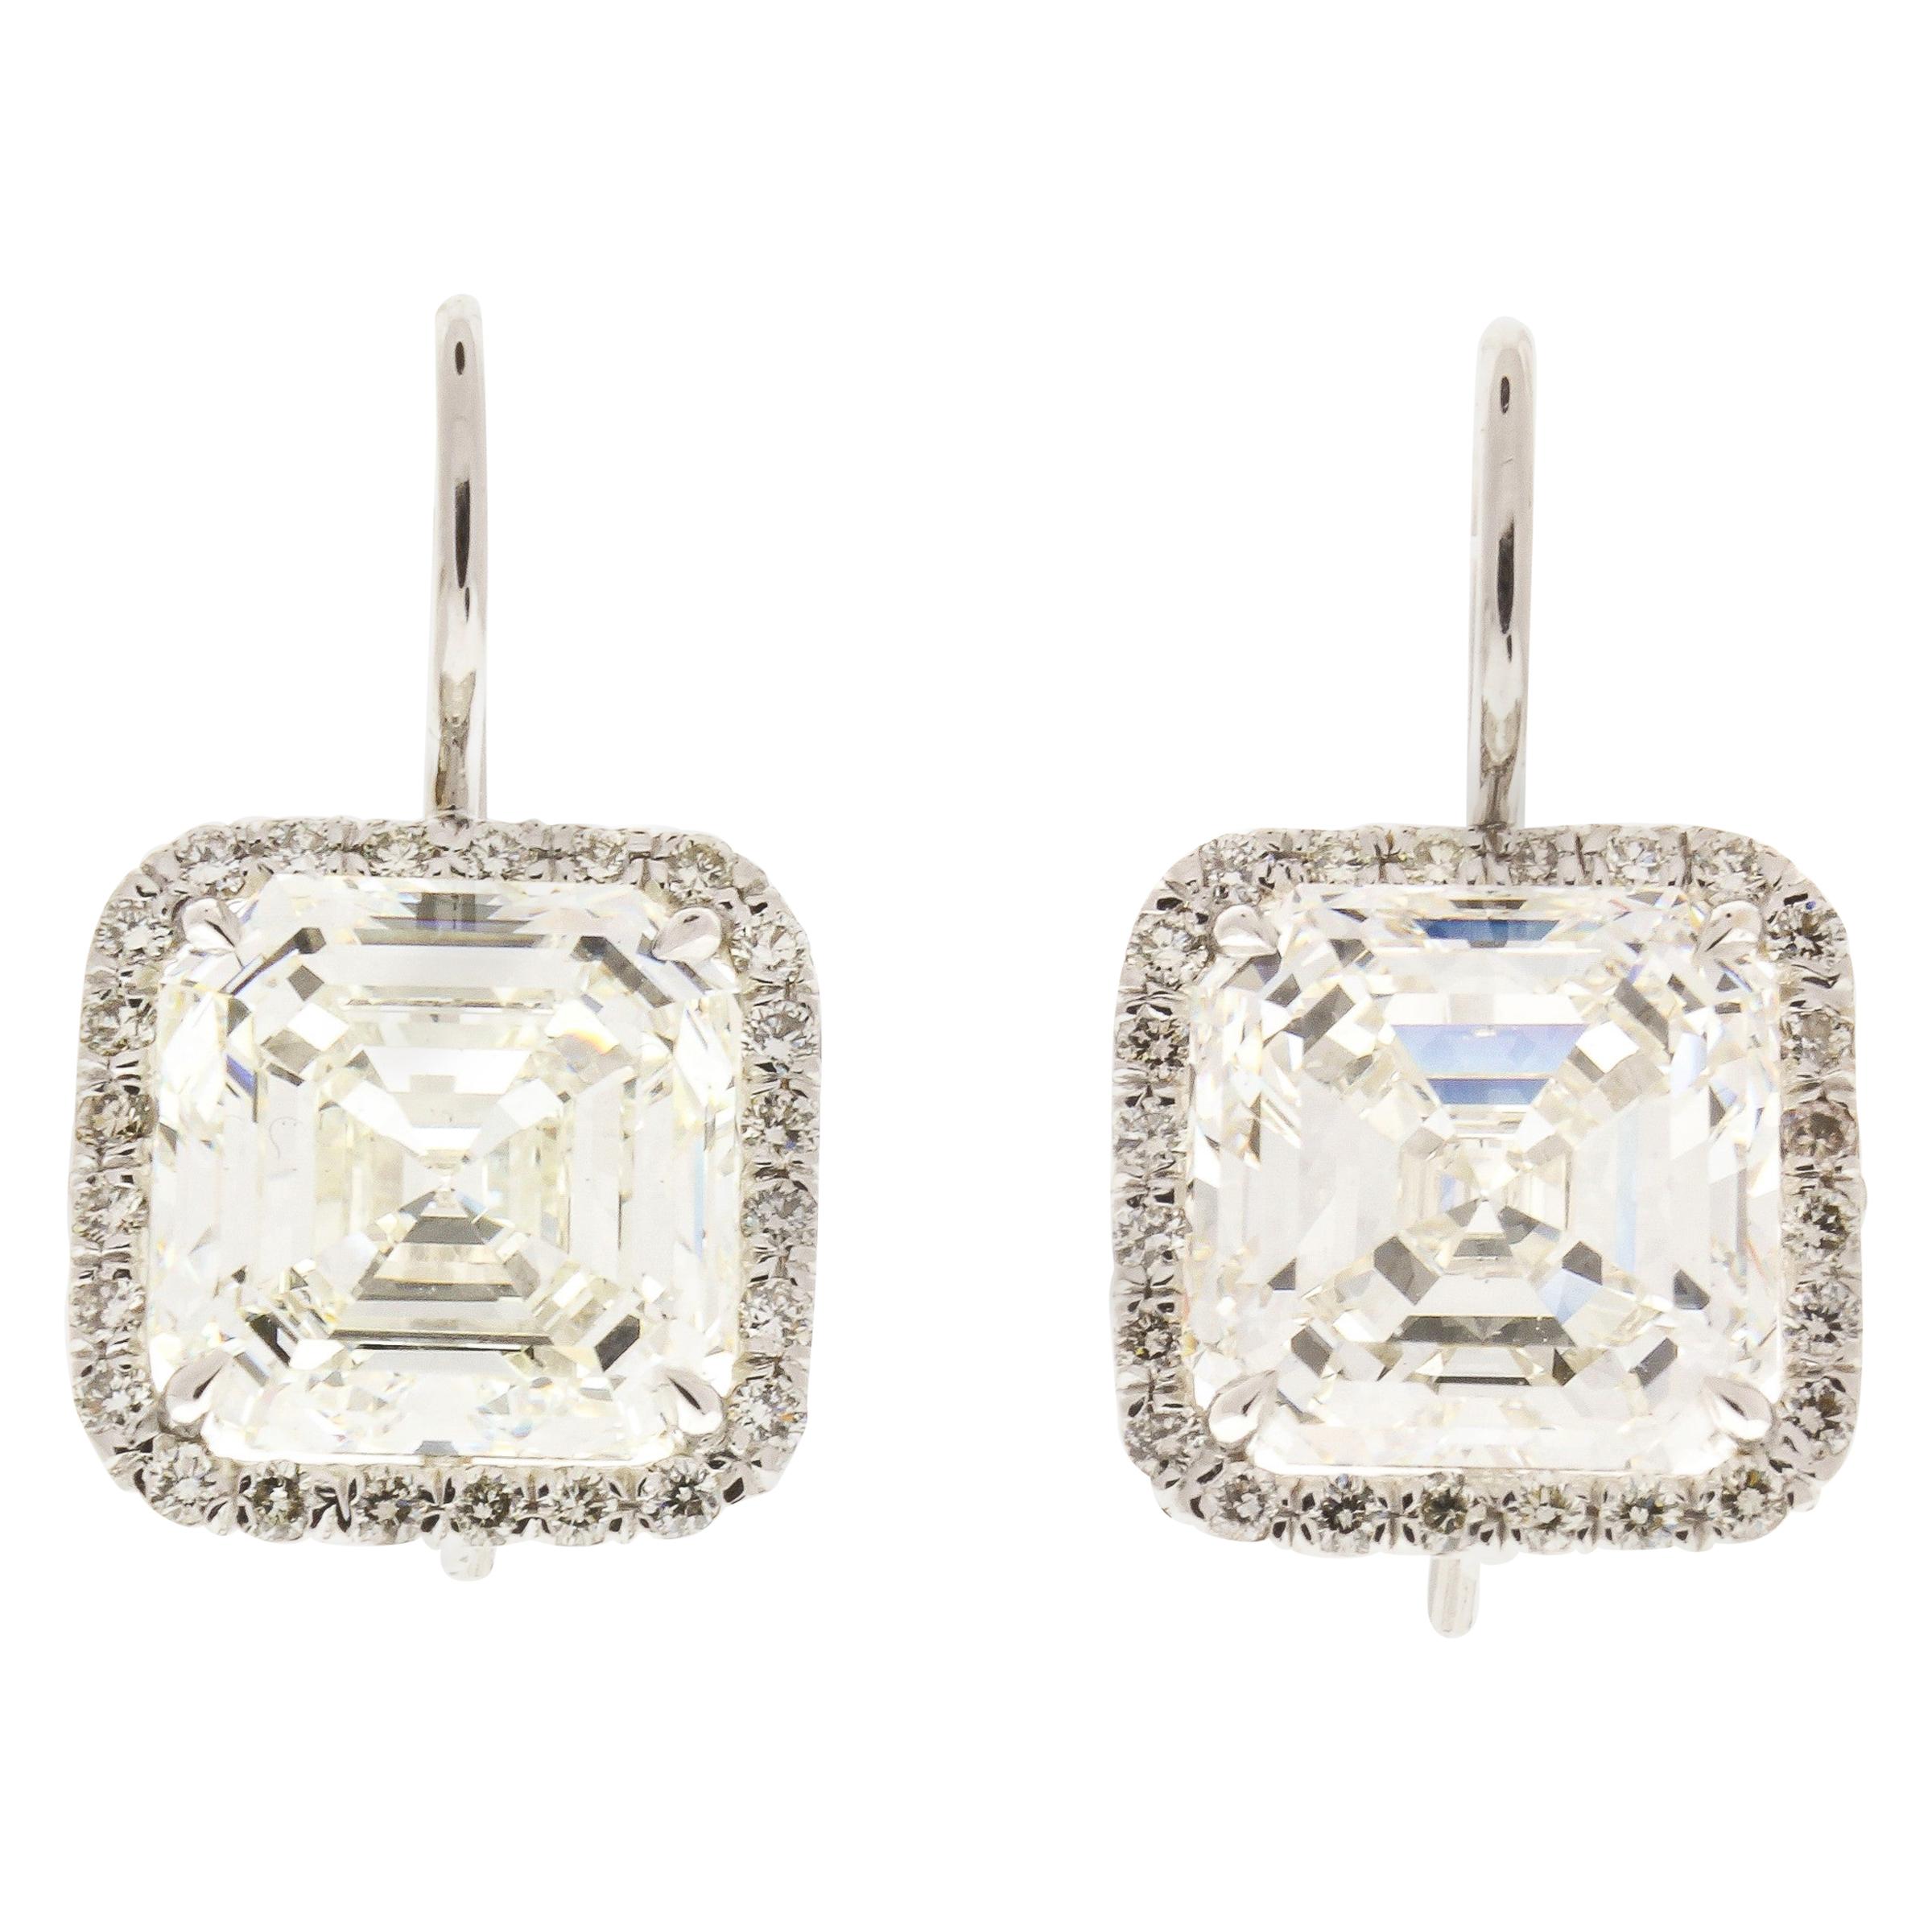 EGL USA Certified 10.04 Carat Total Square Emerald Cut Diamond Earrings in 18 K